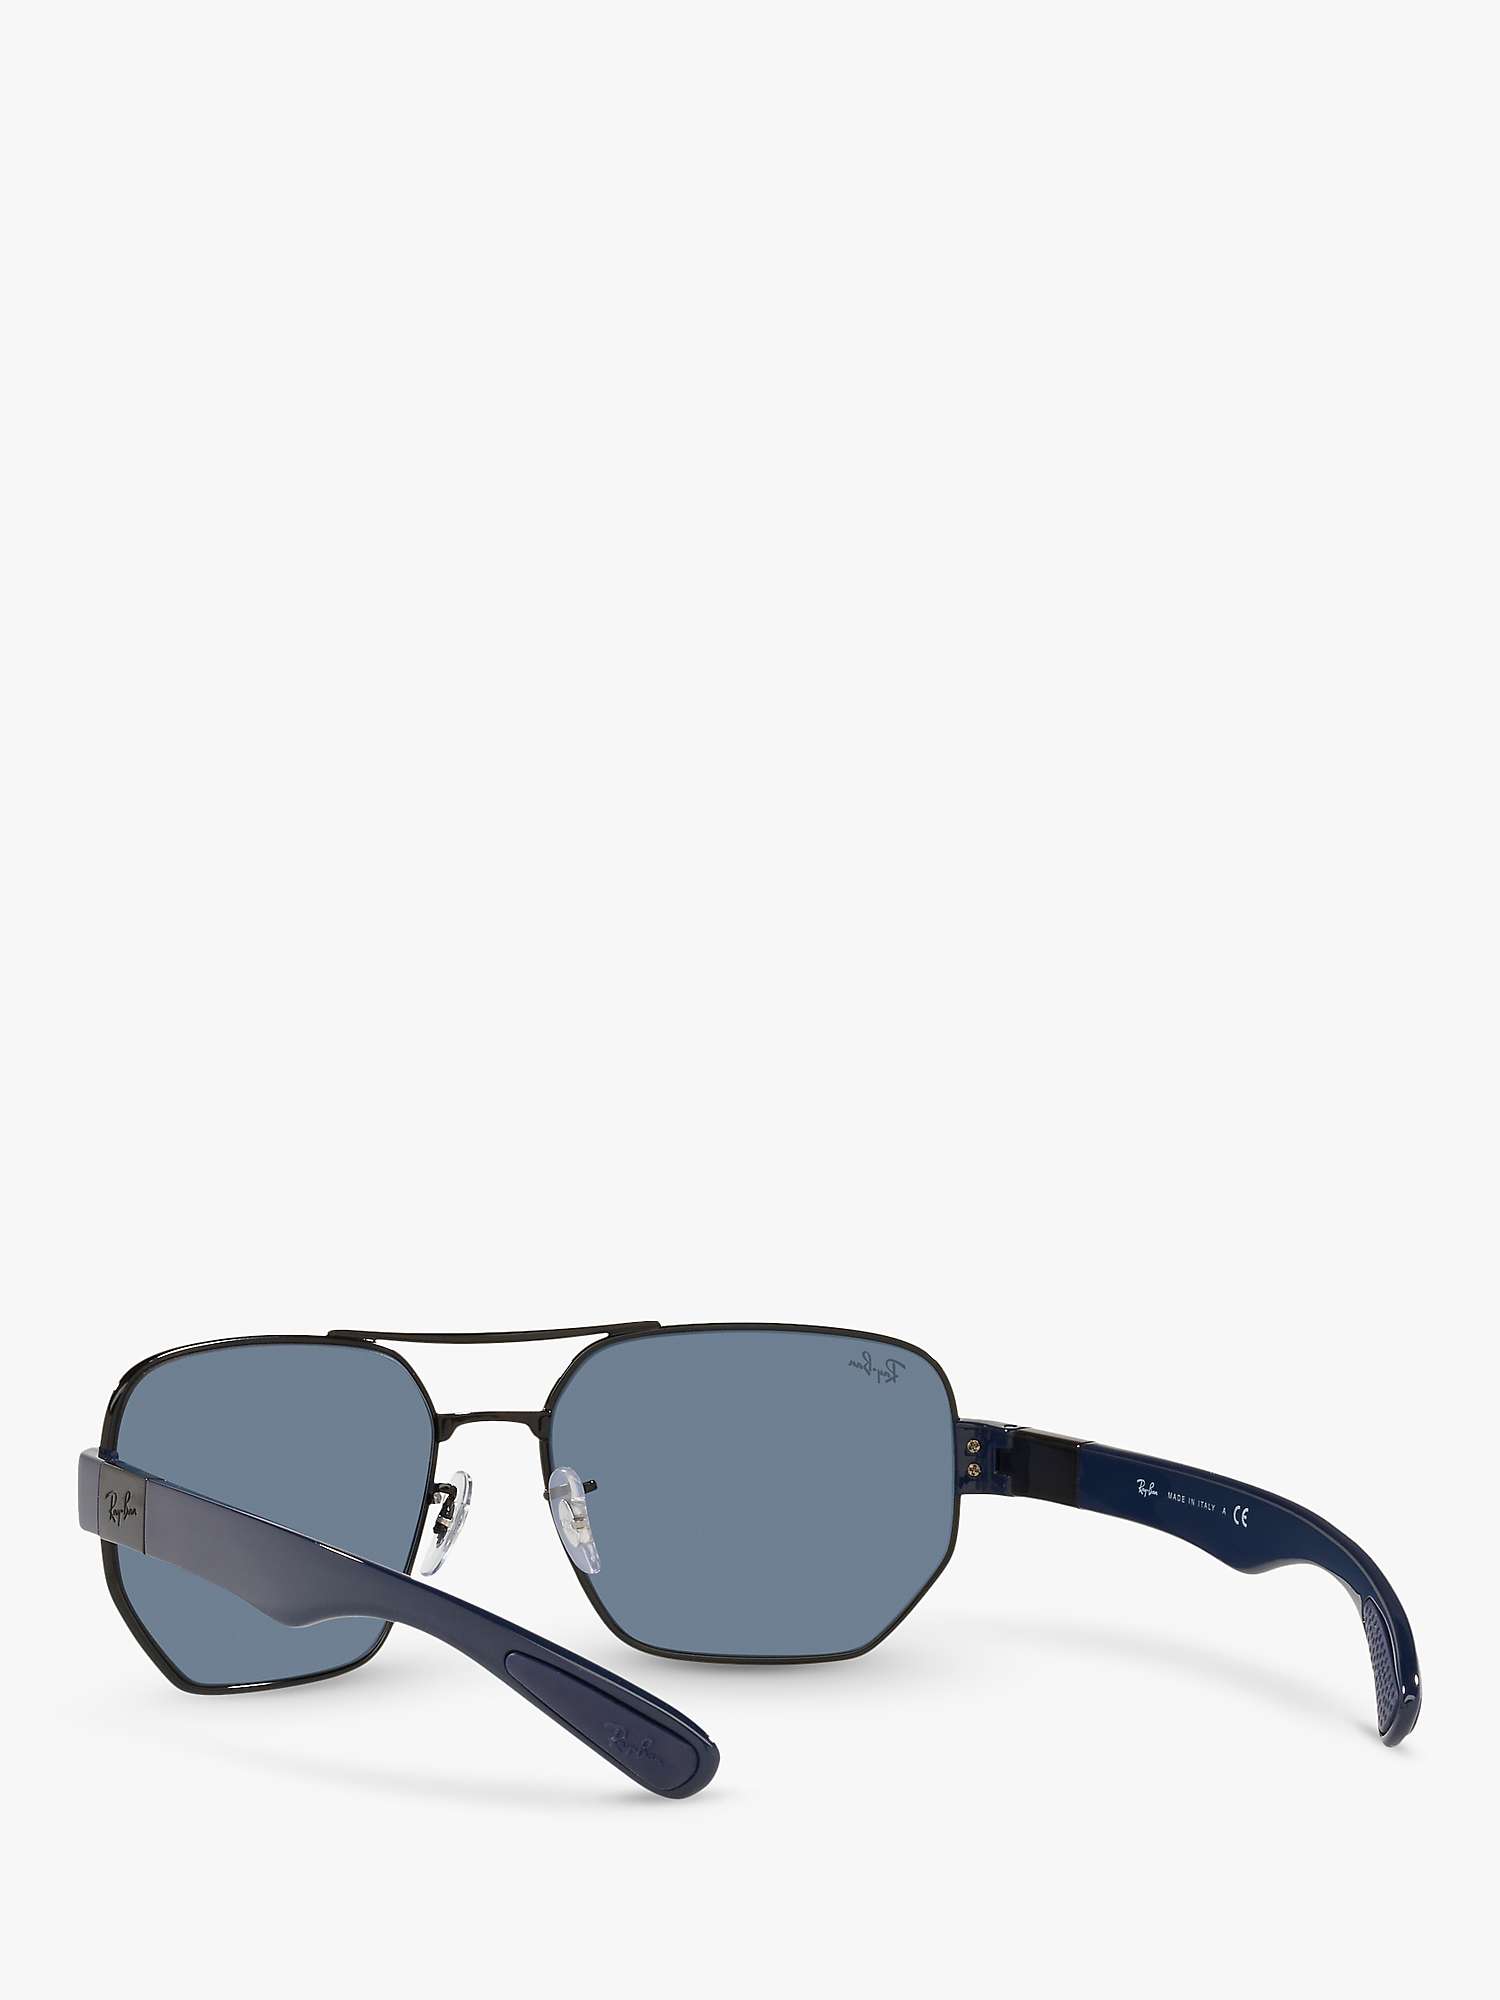 Buy Ray-Ban RB3672 Unisex Irregular Steel Frame Sunglasses, Black/Classic Dark Blue Online at johnlewis.com